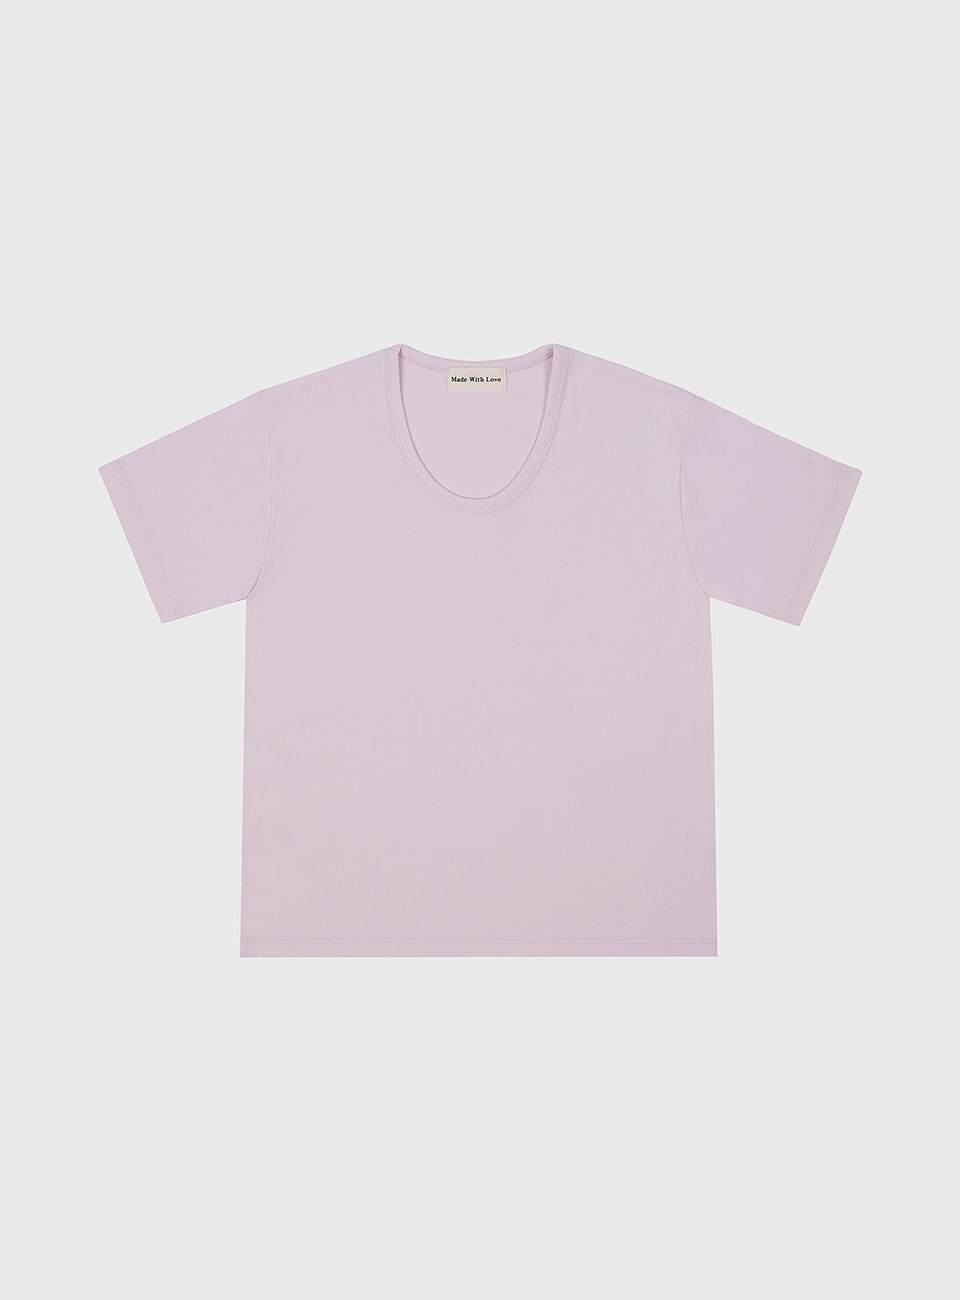 Joy U-neck tee(pink)